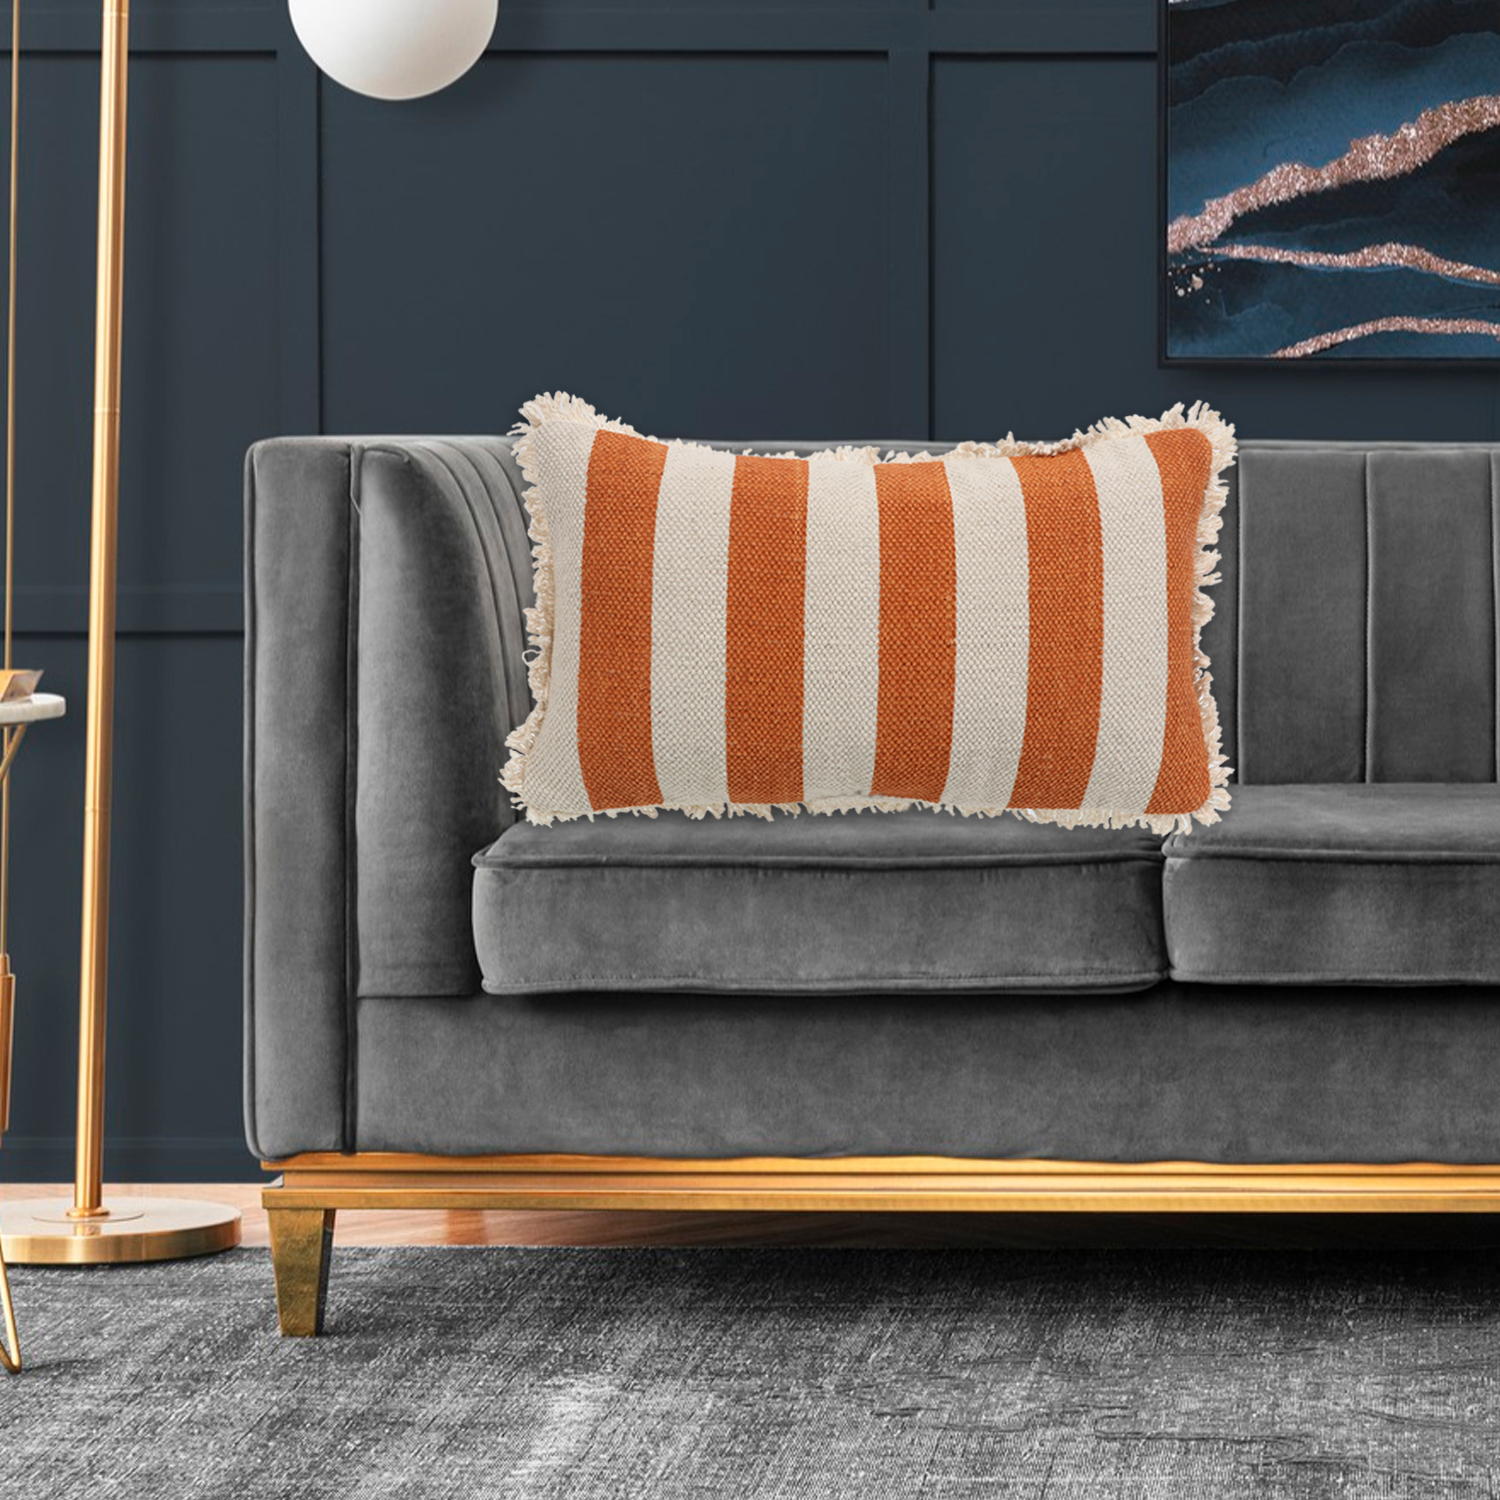 Printed Stripe Dark Orange   Cushions Covers with fringes 12X20 Inch